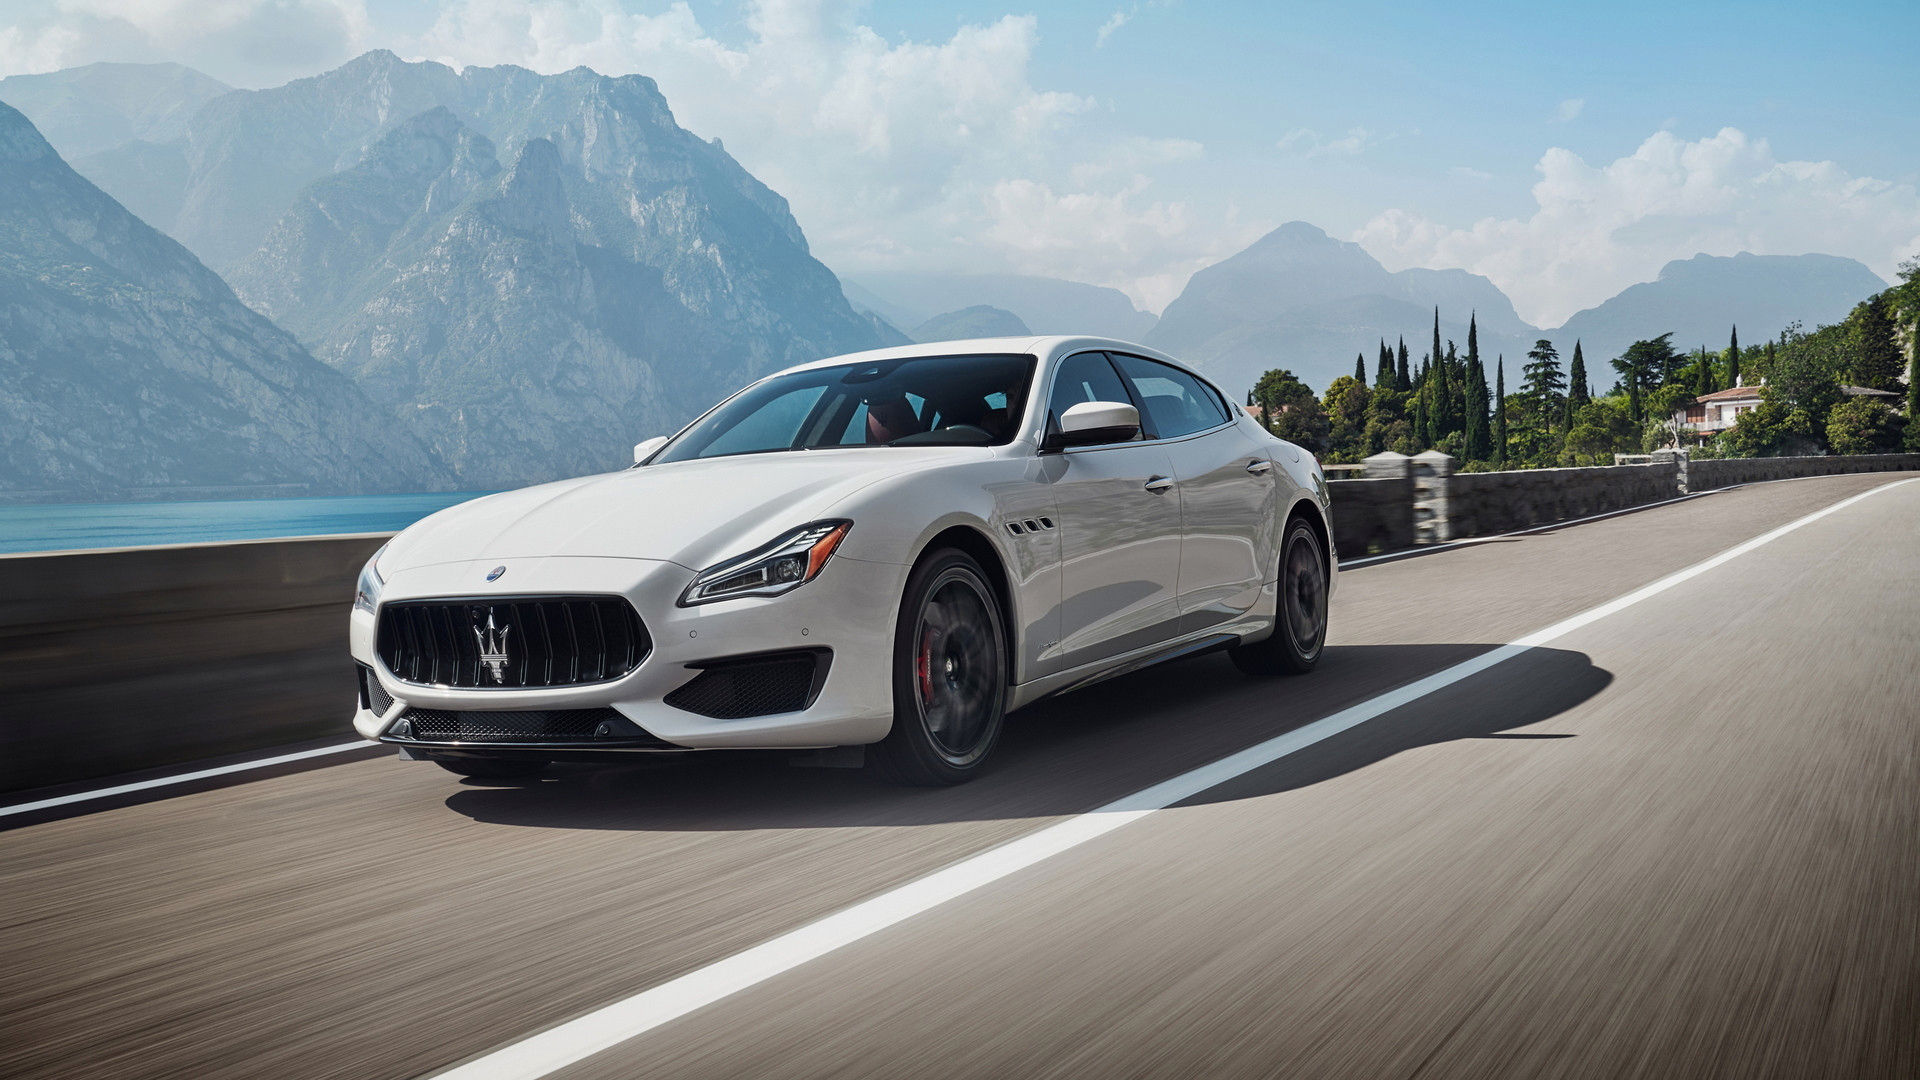 Maserati Quattroporte GTS – the luxury sedan in Bianco color on the road